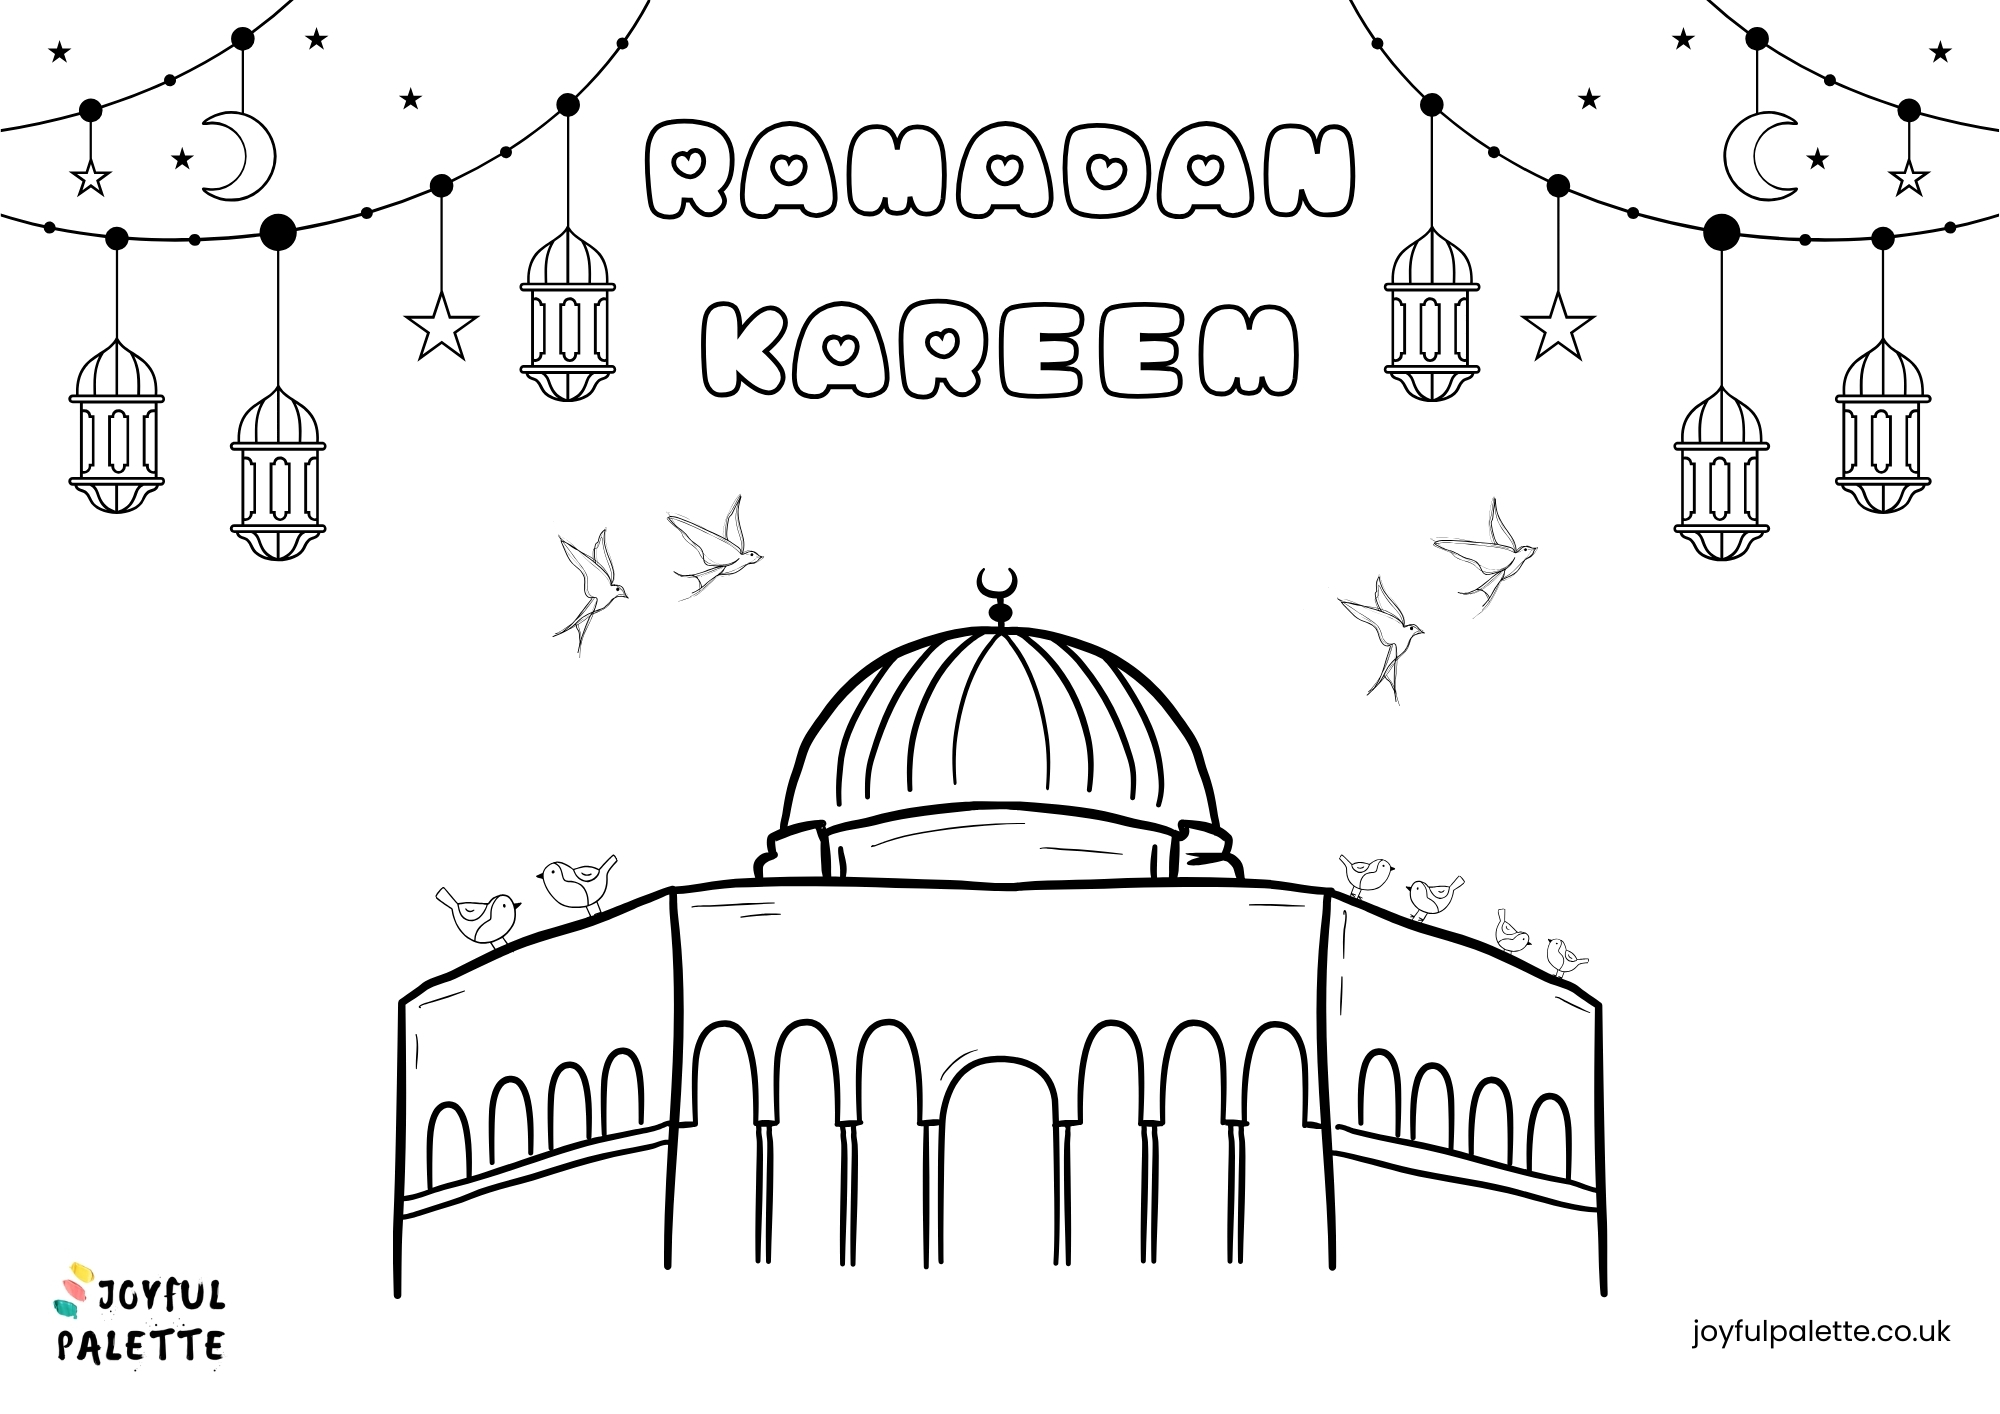 Ramadan Kareem Coloring Page